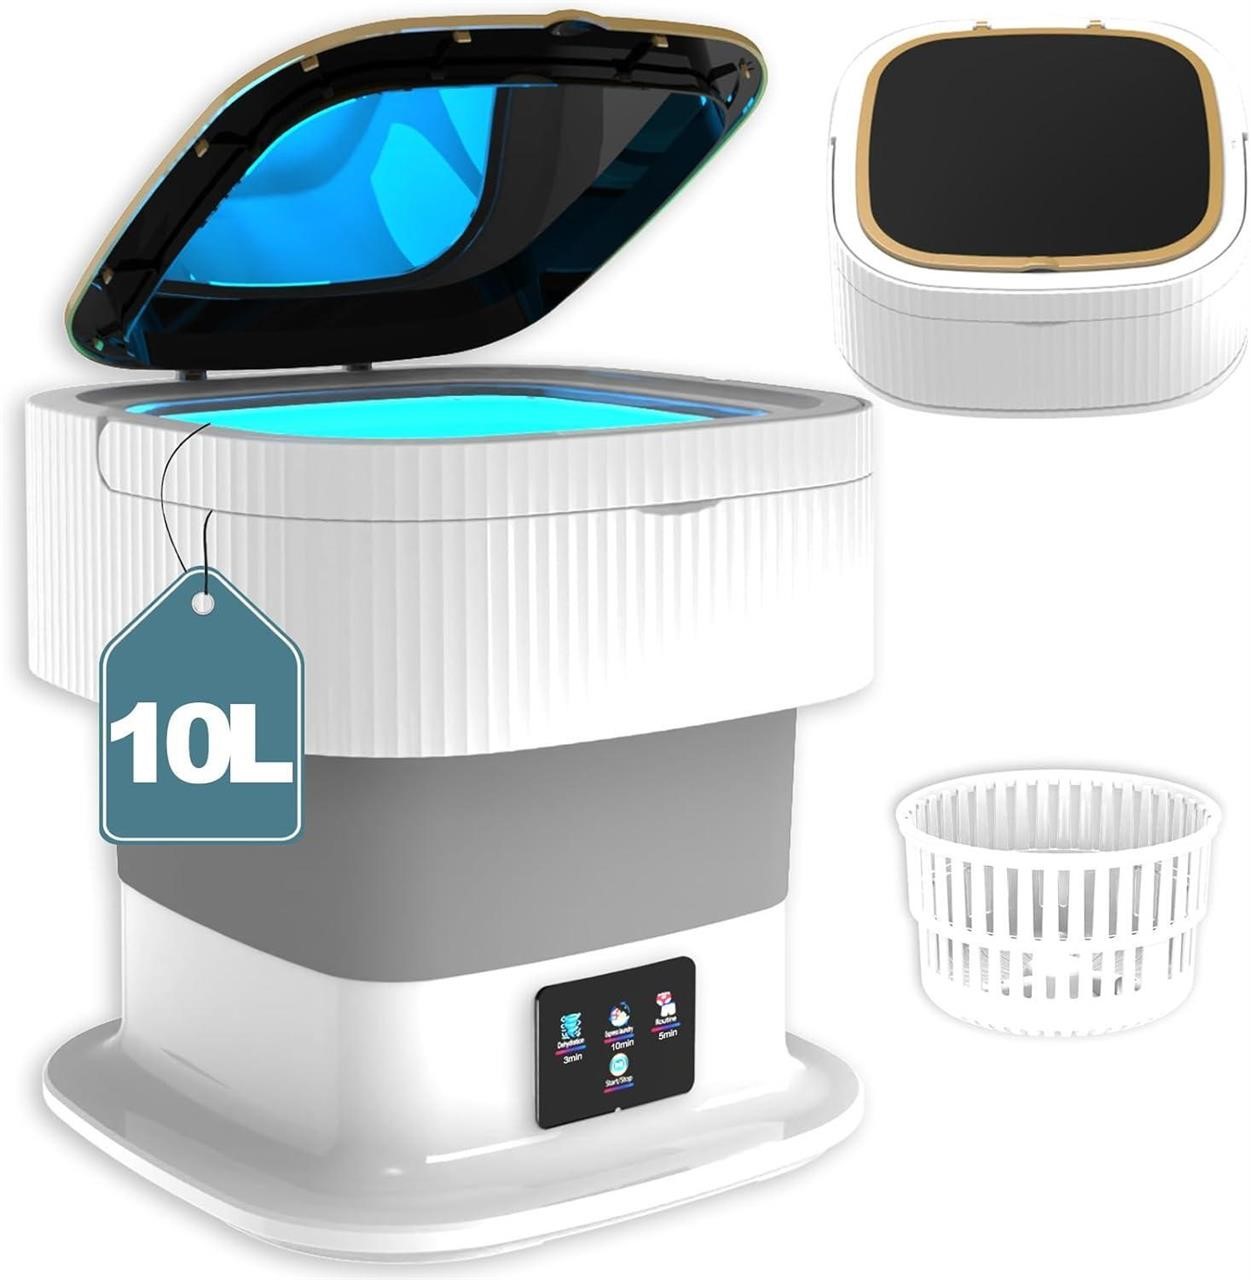 10L Mini Foldable Washer-Dryer